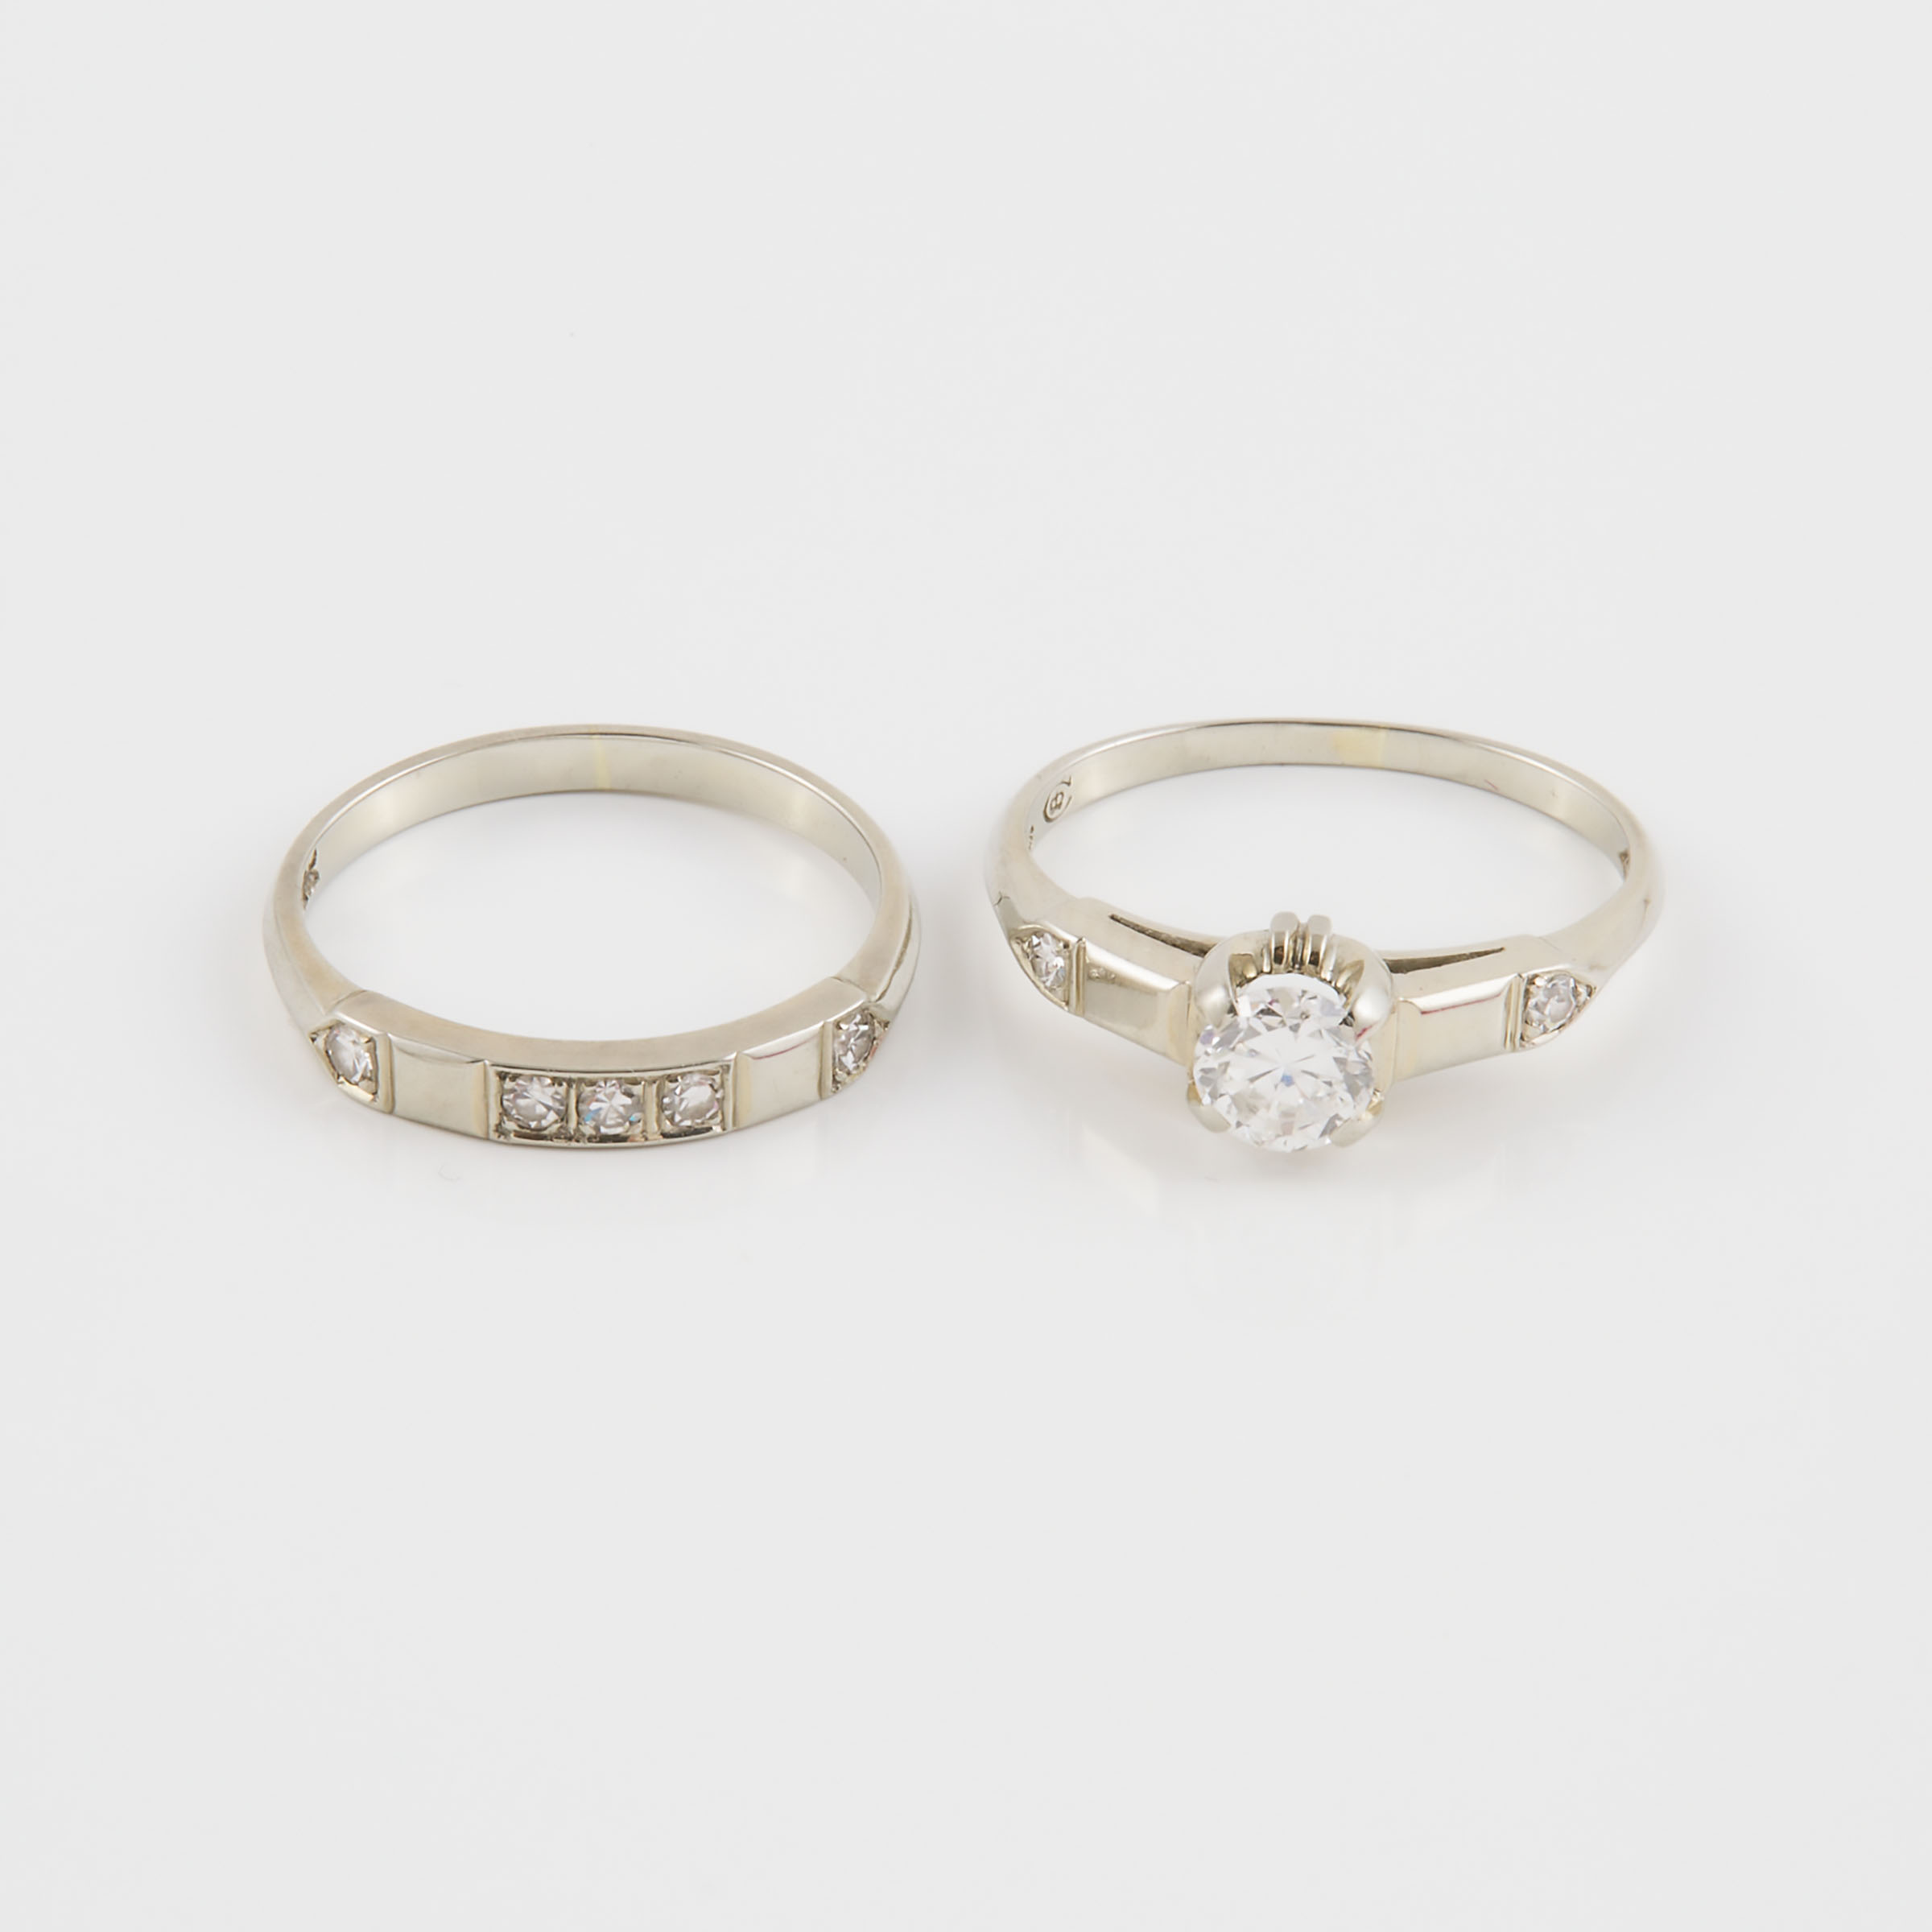 Birks 18k White Gold Engagement/Wedding Ring Suite